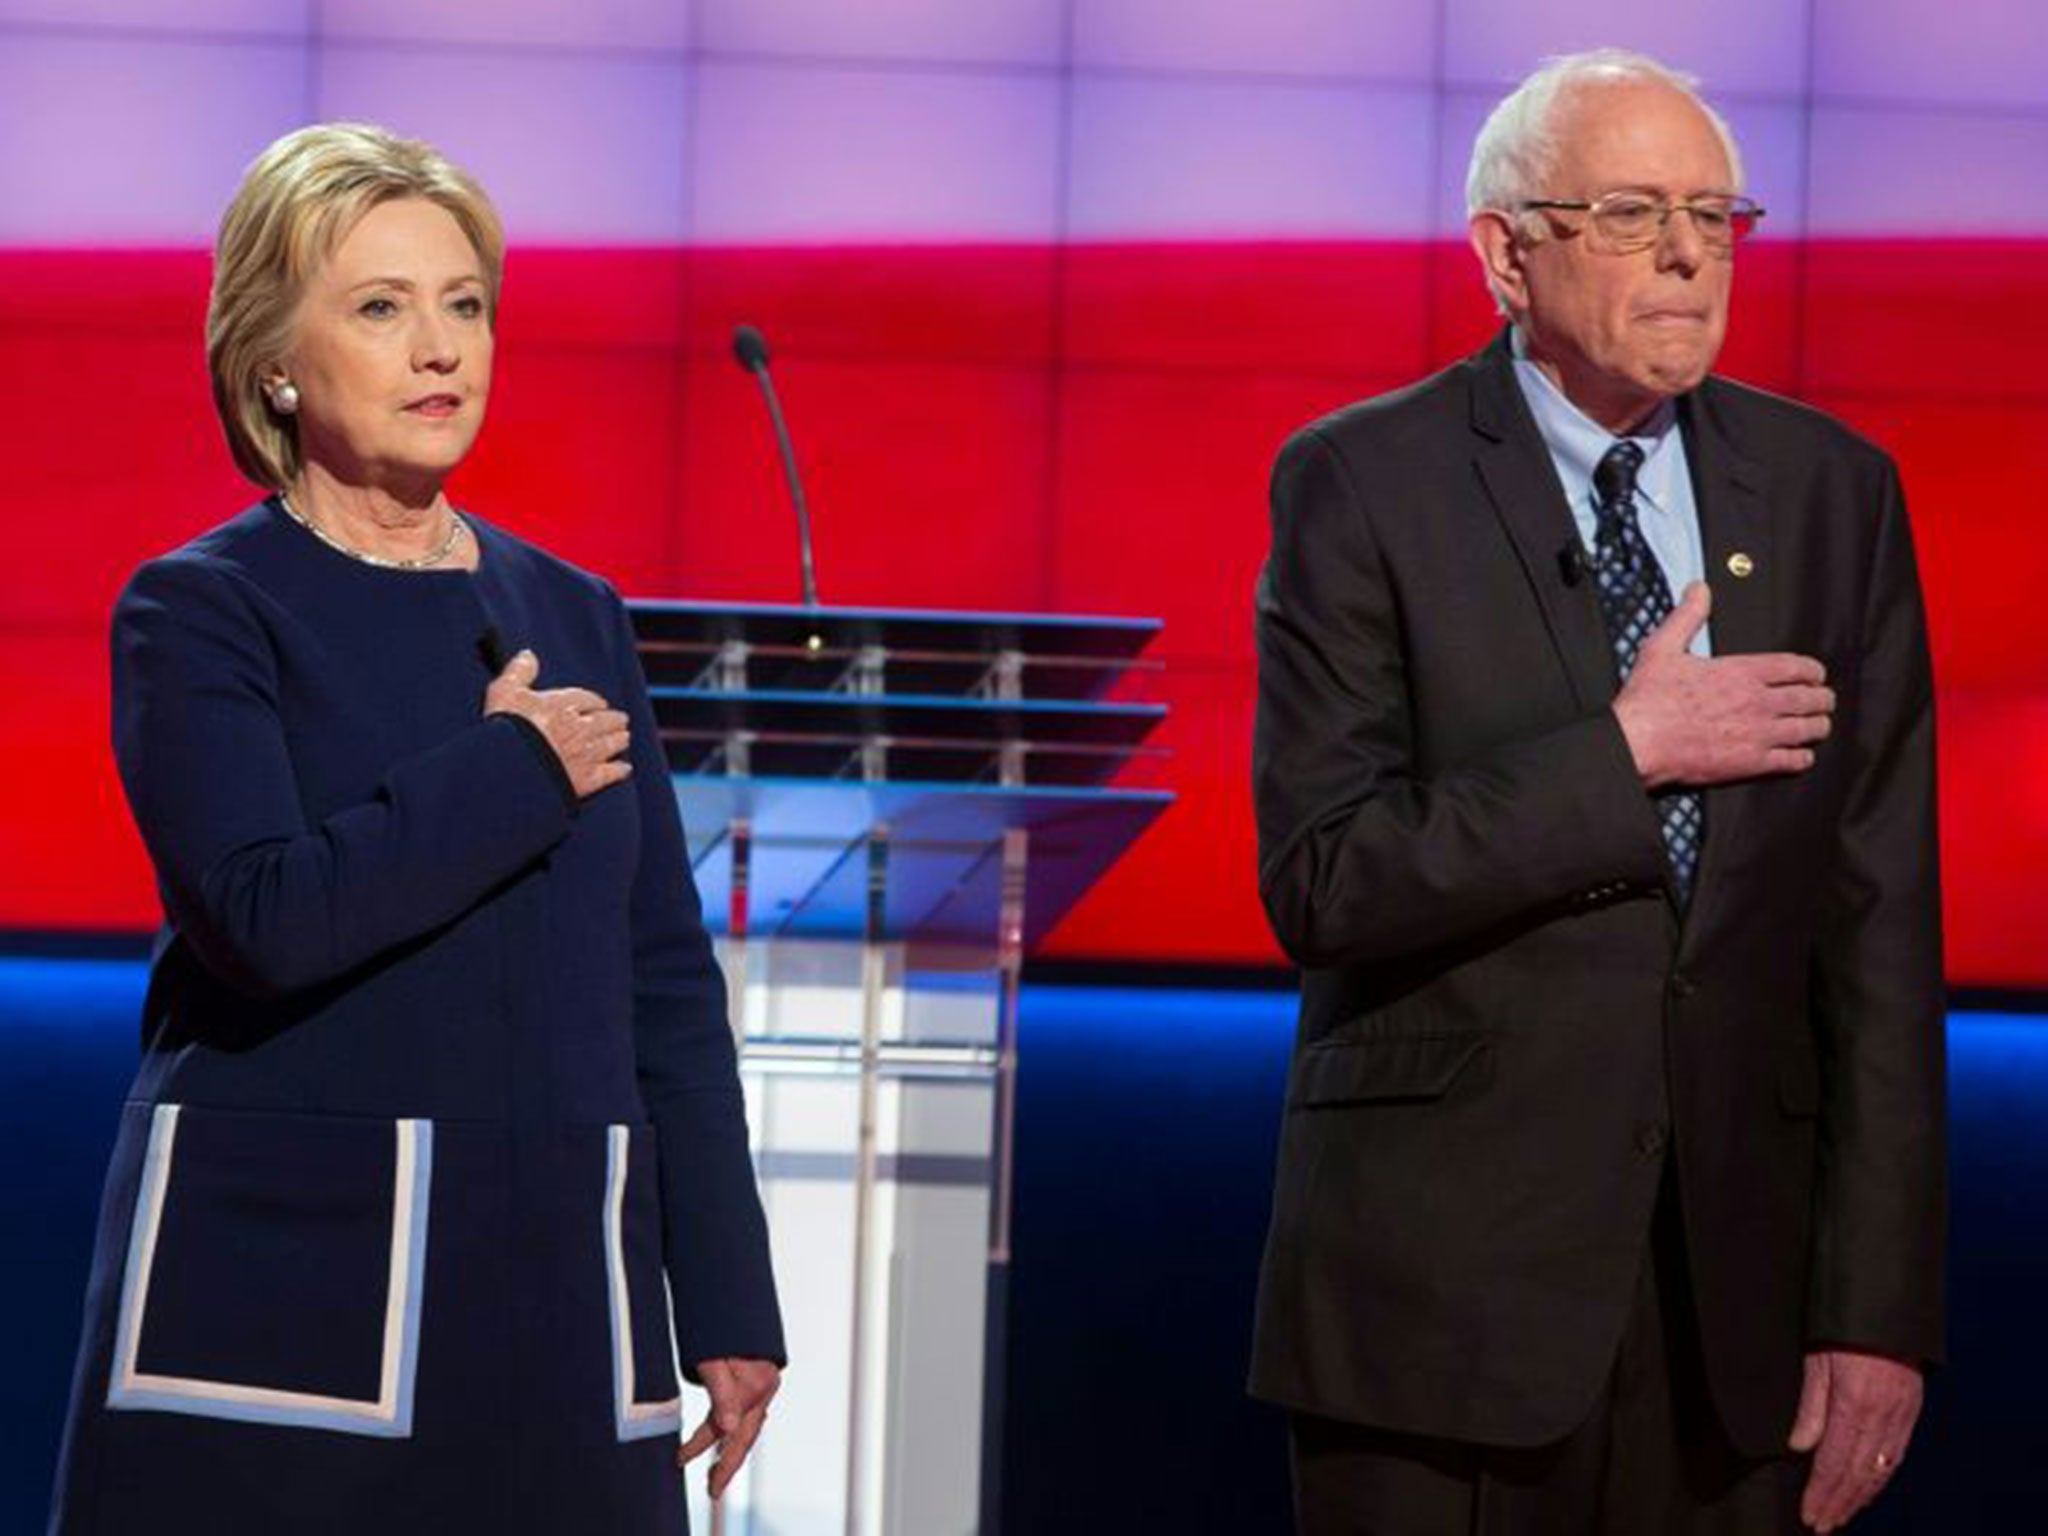 84 per cent of millennials backed Bernie Sanders over Hillary Clinton in Iowa